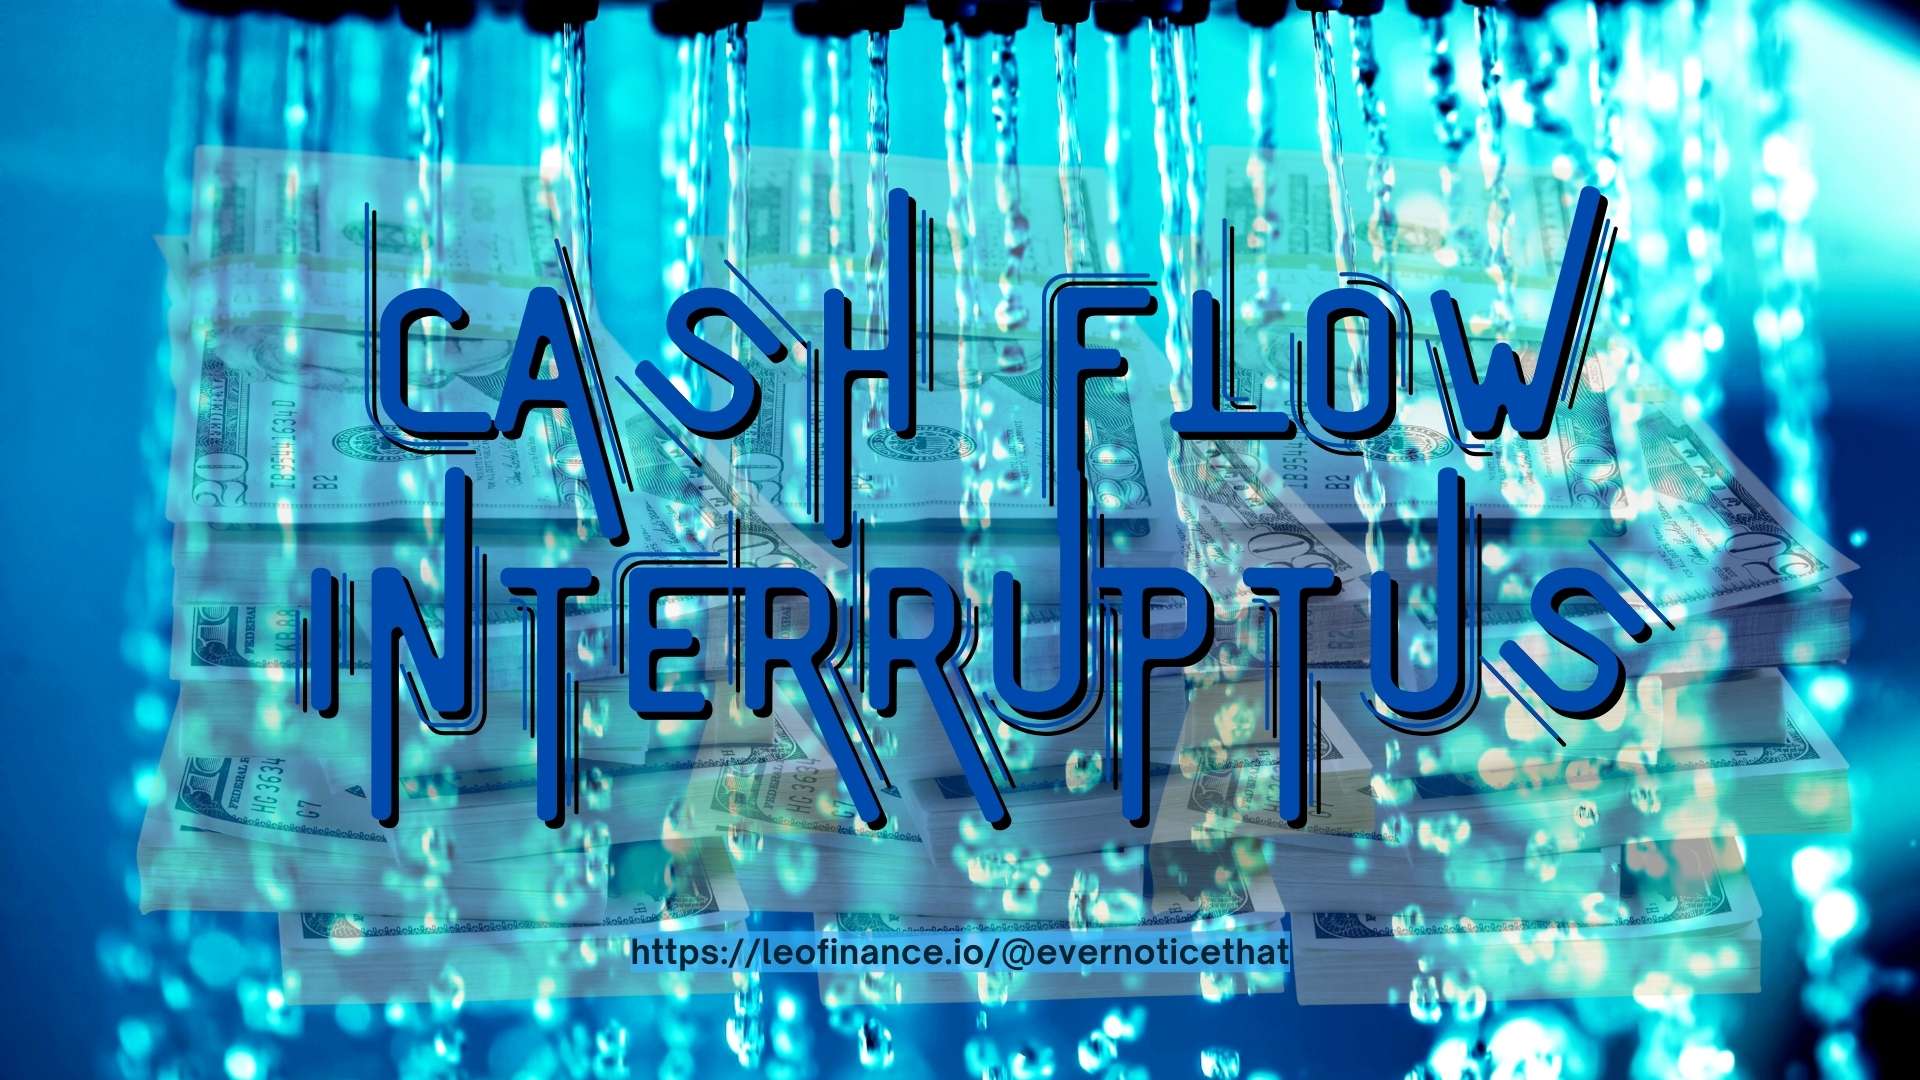 cash-flow-interruptus-banks-money-finance-lpud-hive-leofinance @EverNoticeThat httpsleofinance.io@evernoticethat.jpg